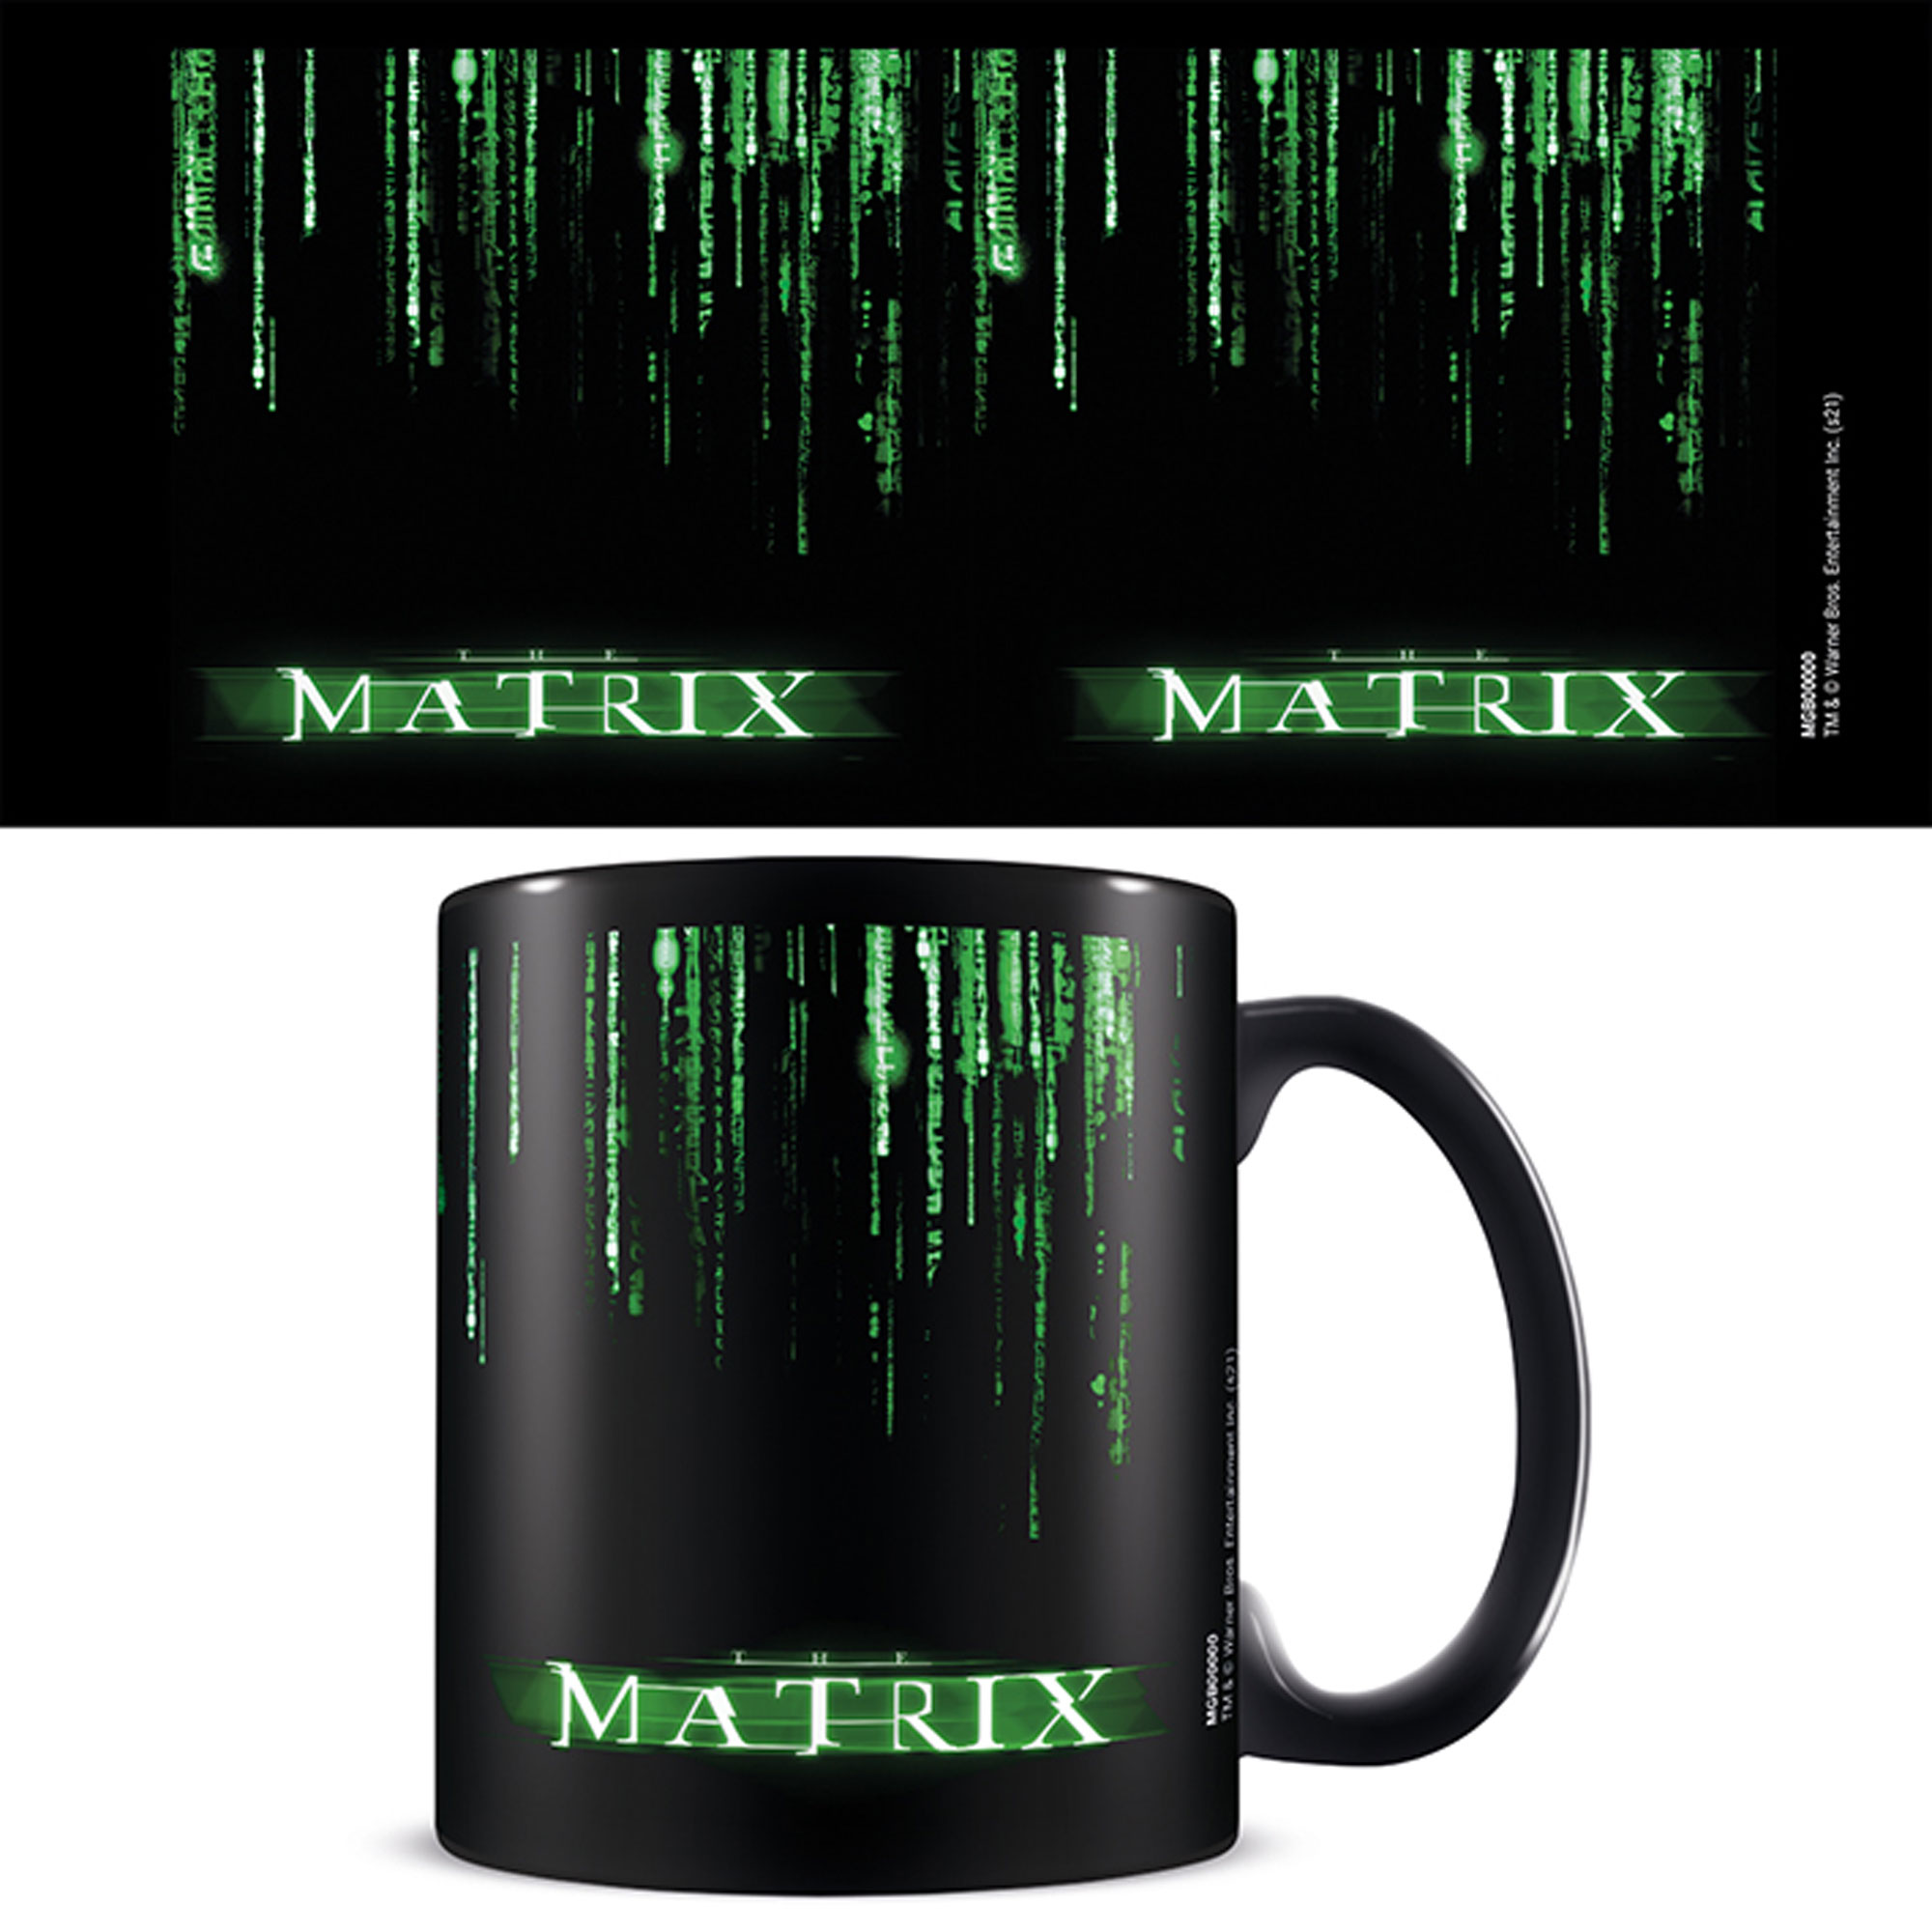 - Matrix, The Code black